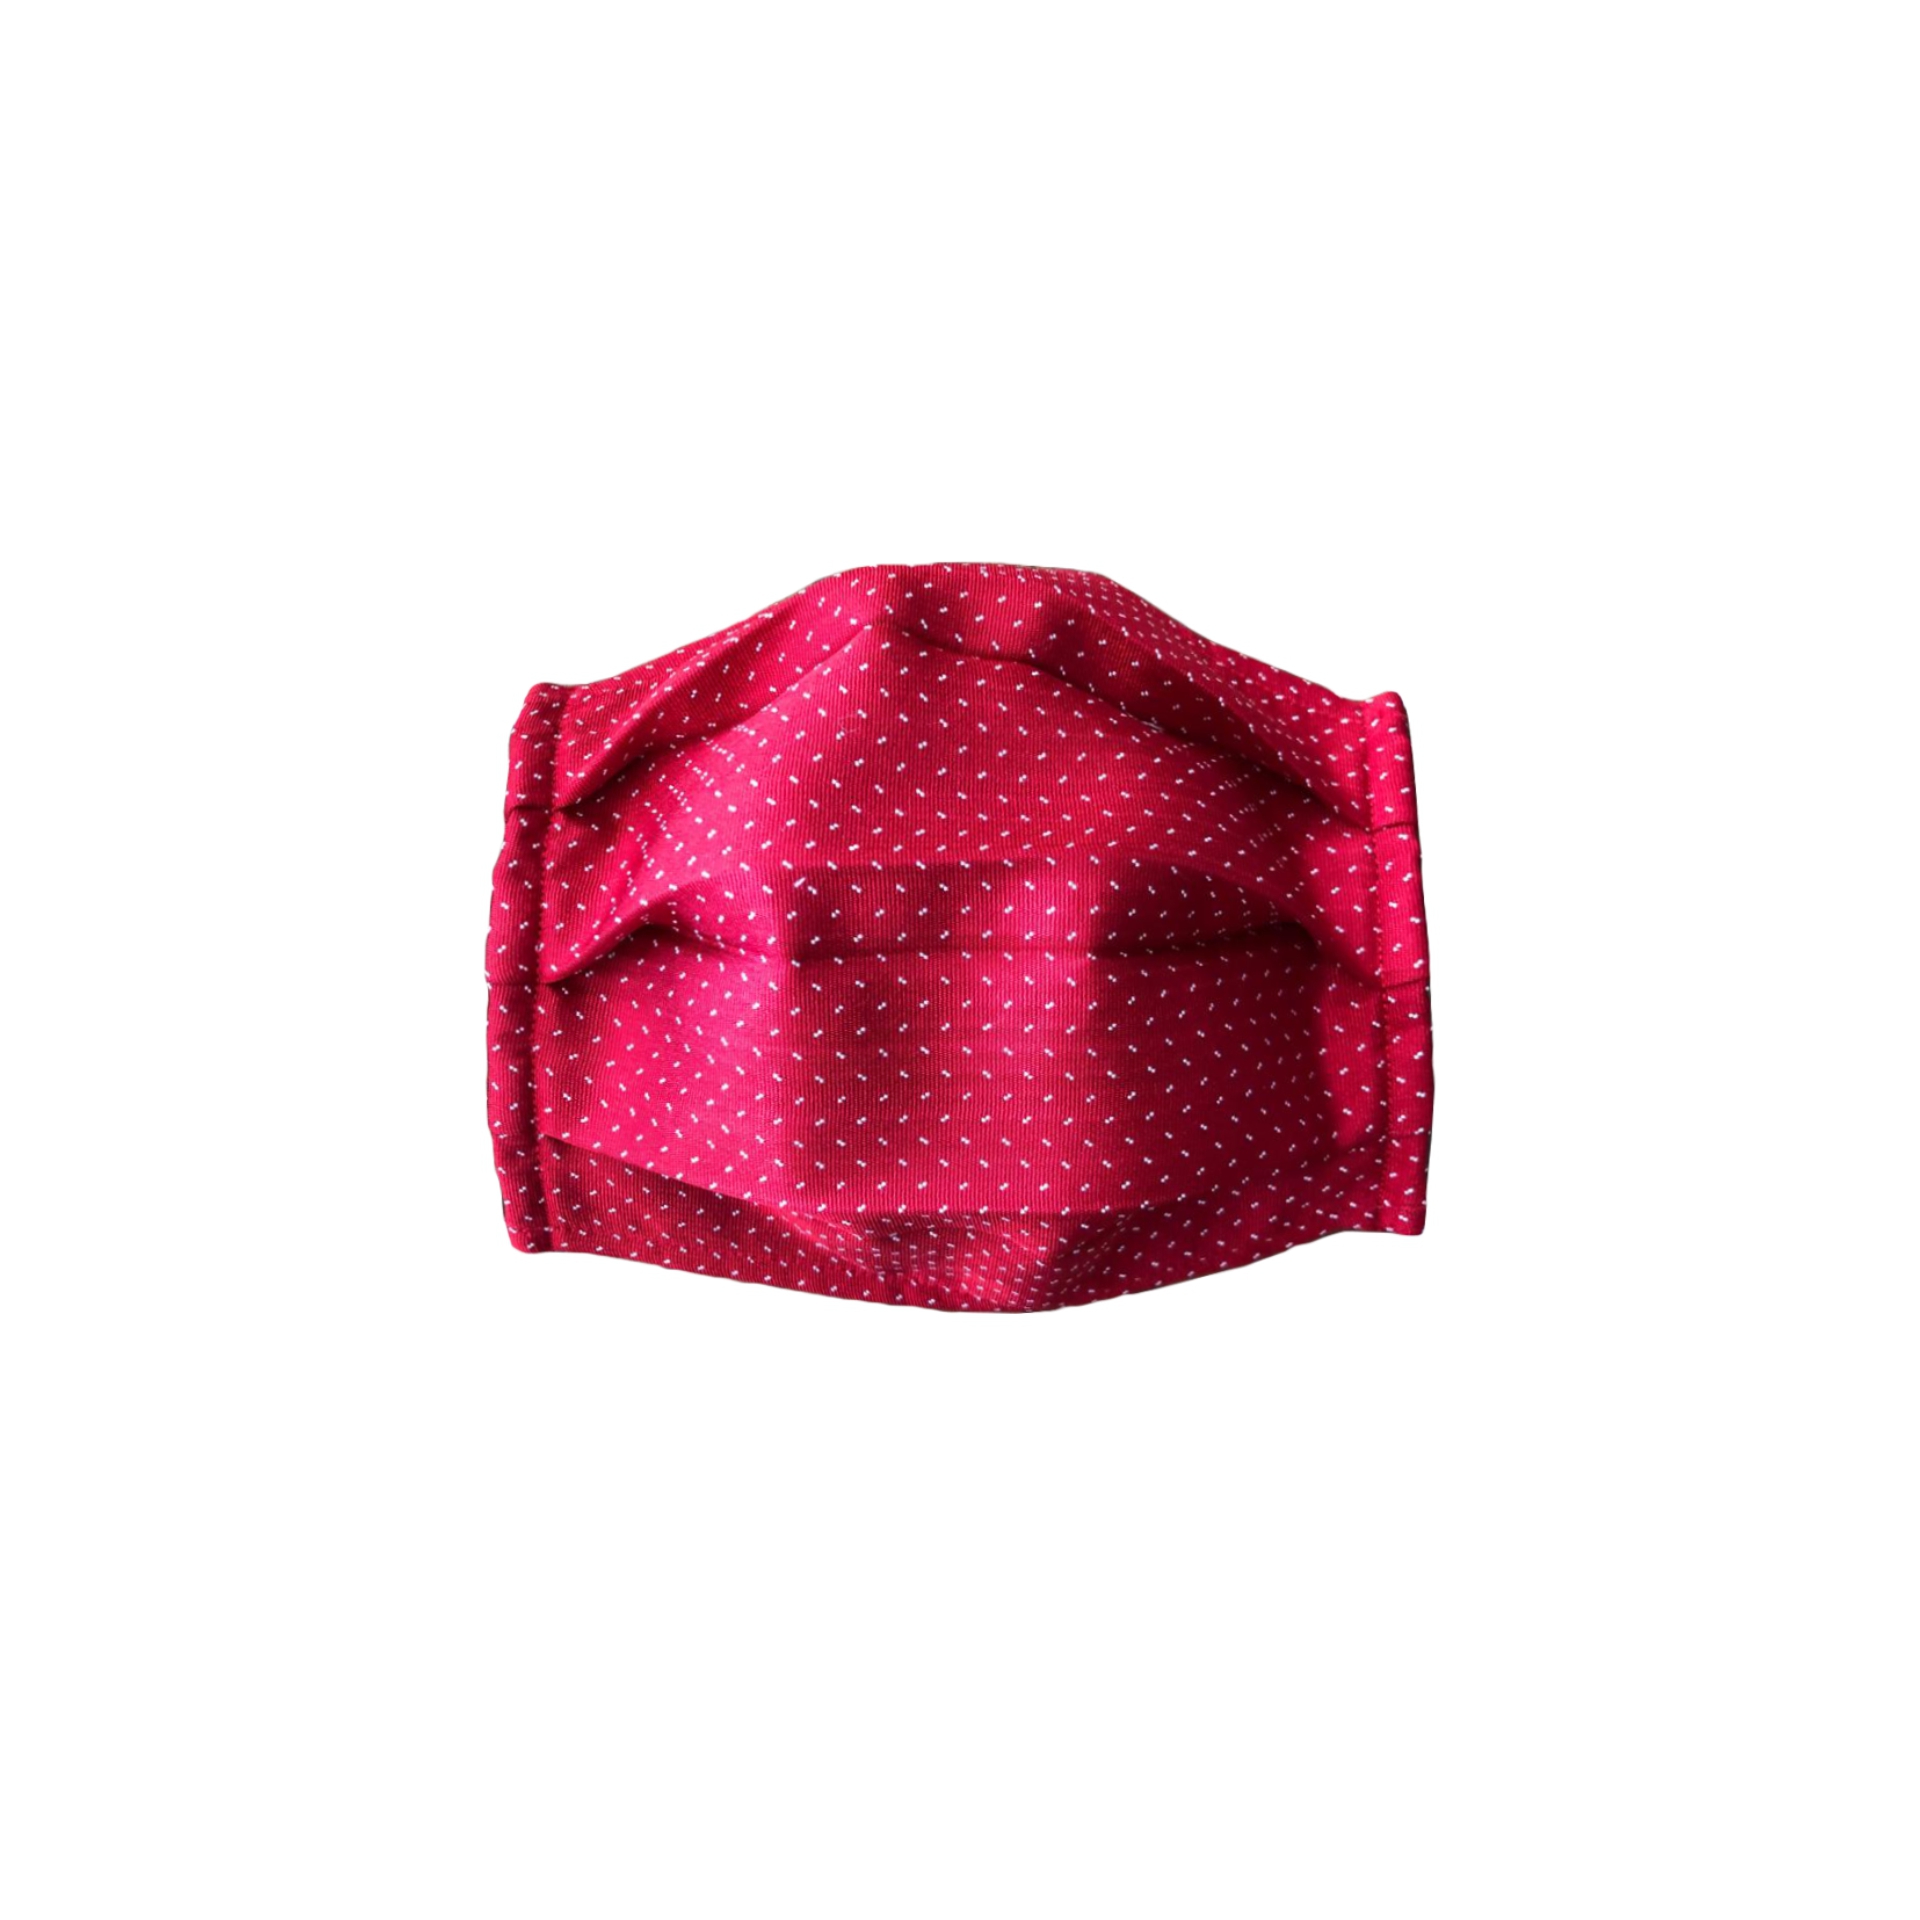 Fashion protective fabric mask, silk, red dot